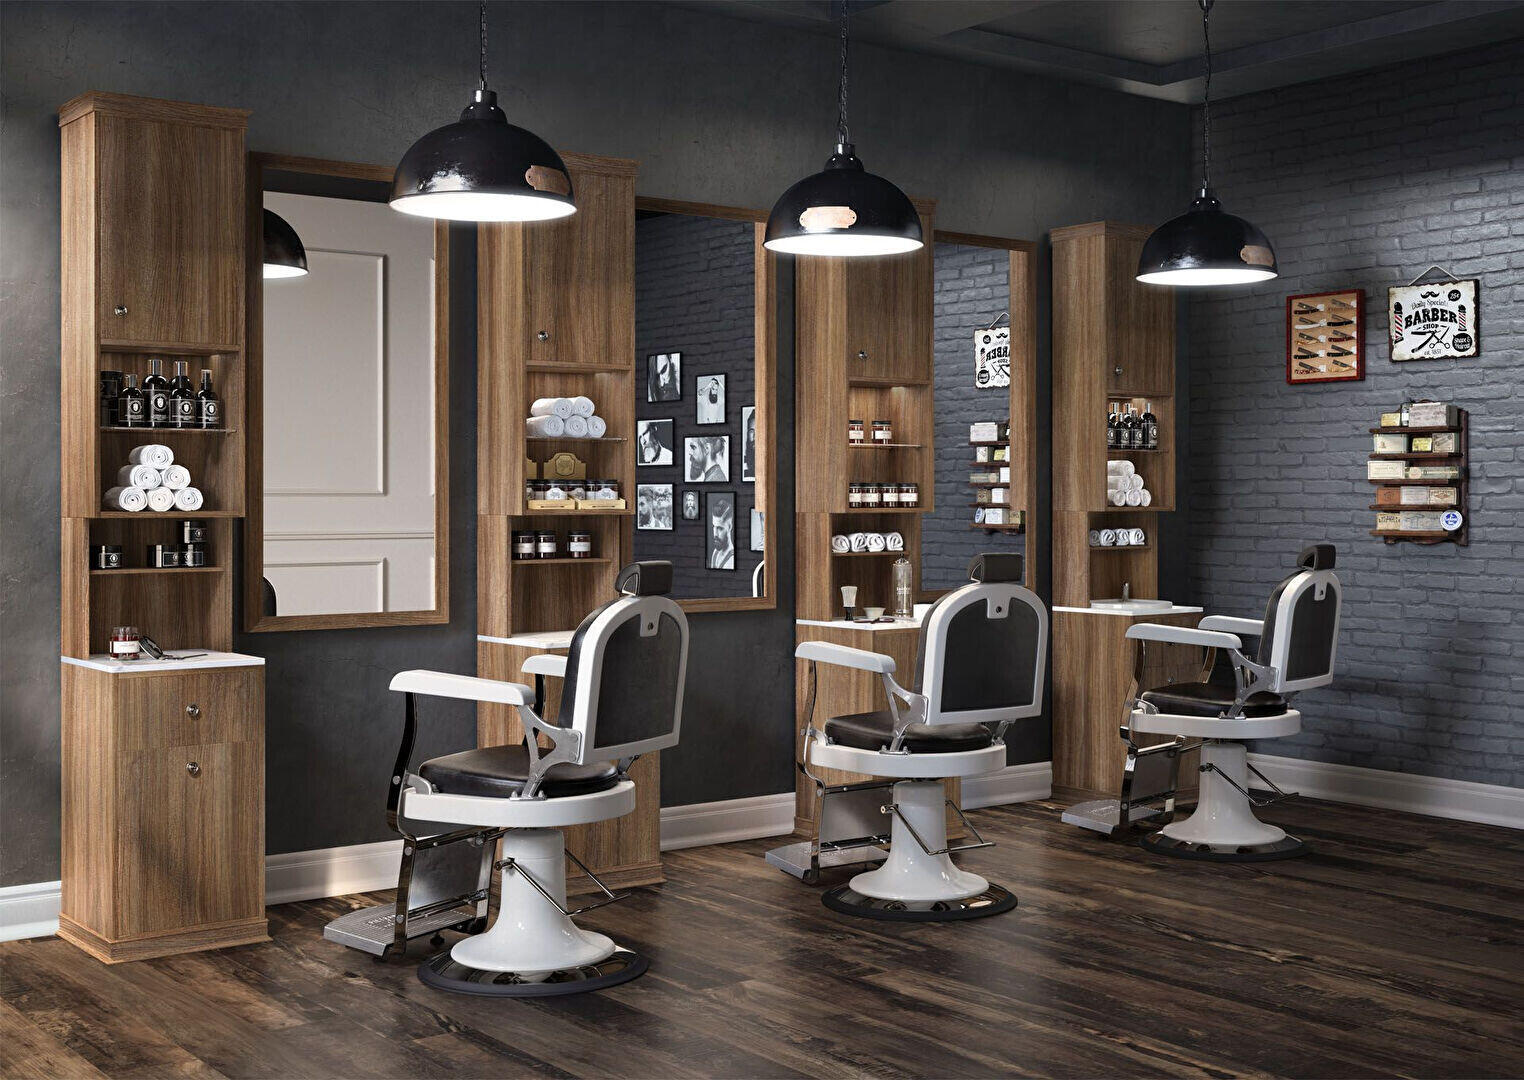 Vend salon de coiffure mixte en centre ville Dinan